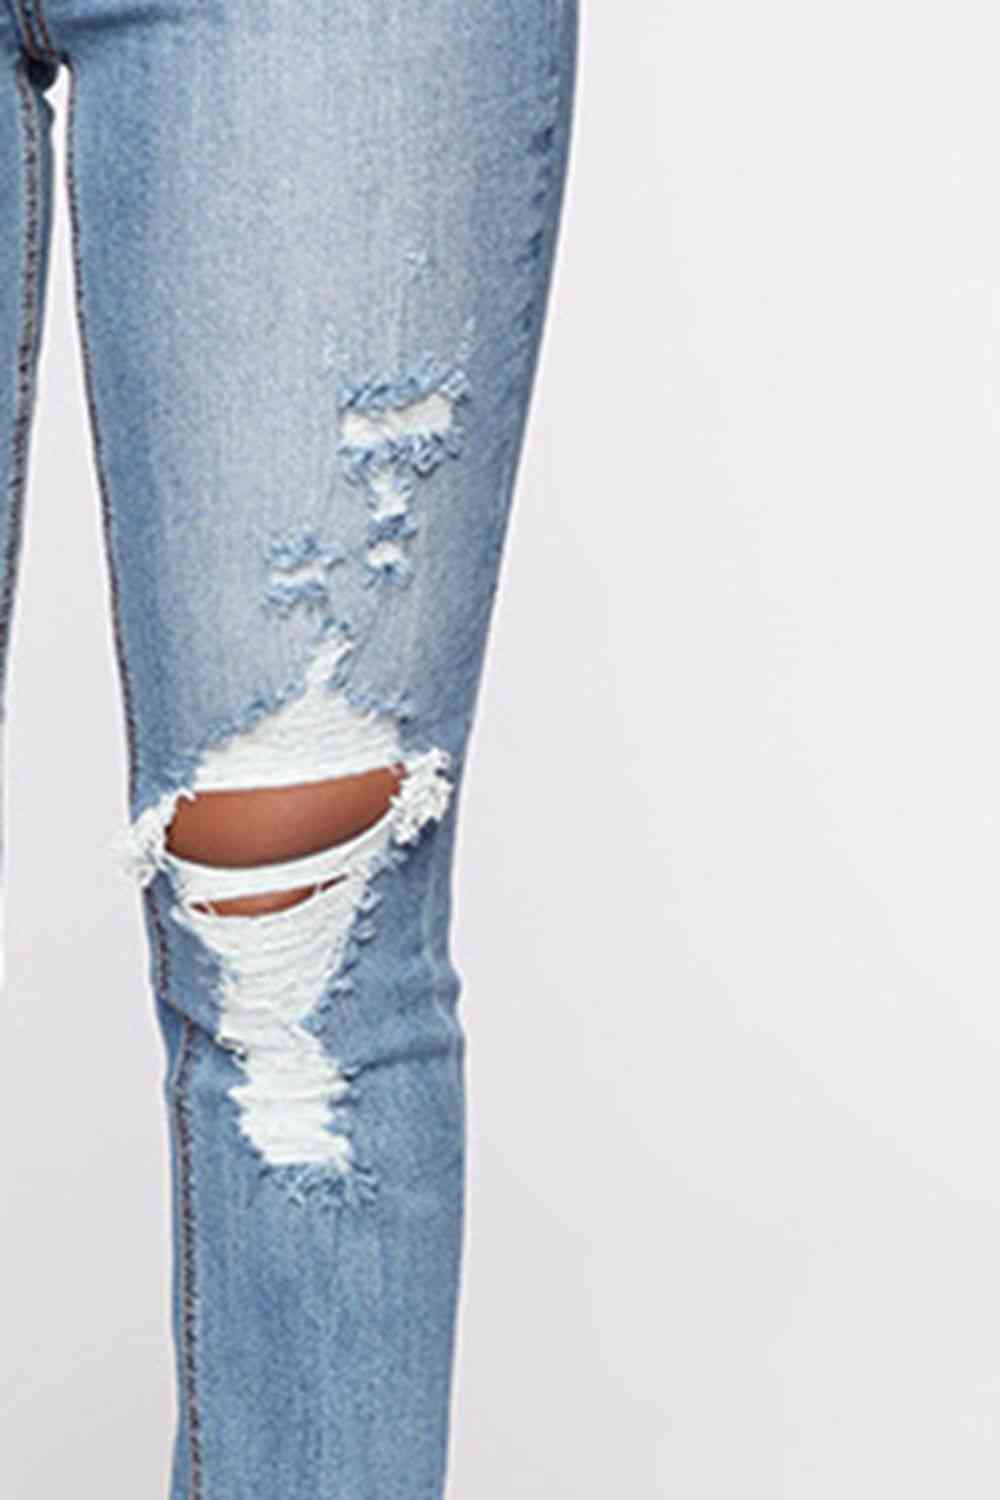 KHD Distressed Slit Jeans  Krazy Heart Designs Boutique   